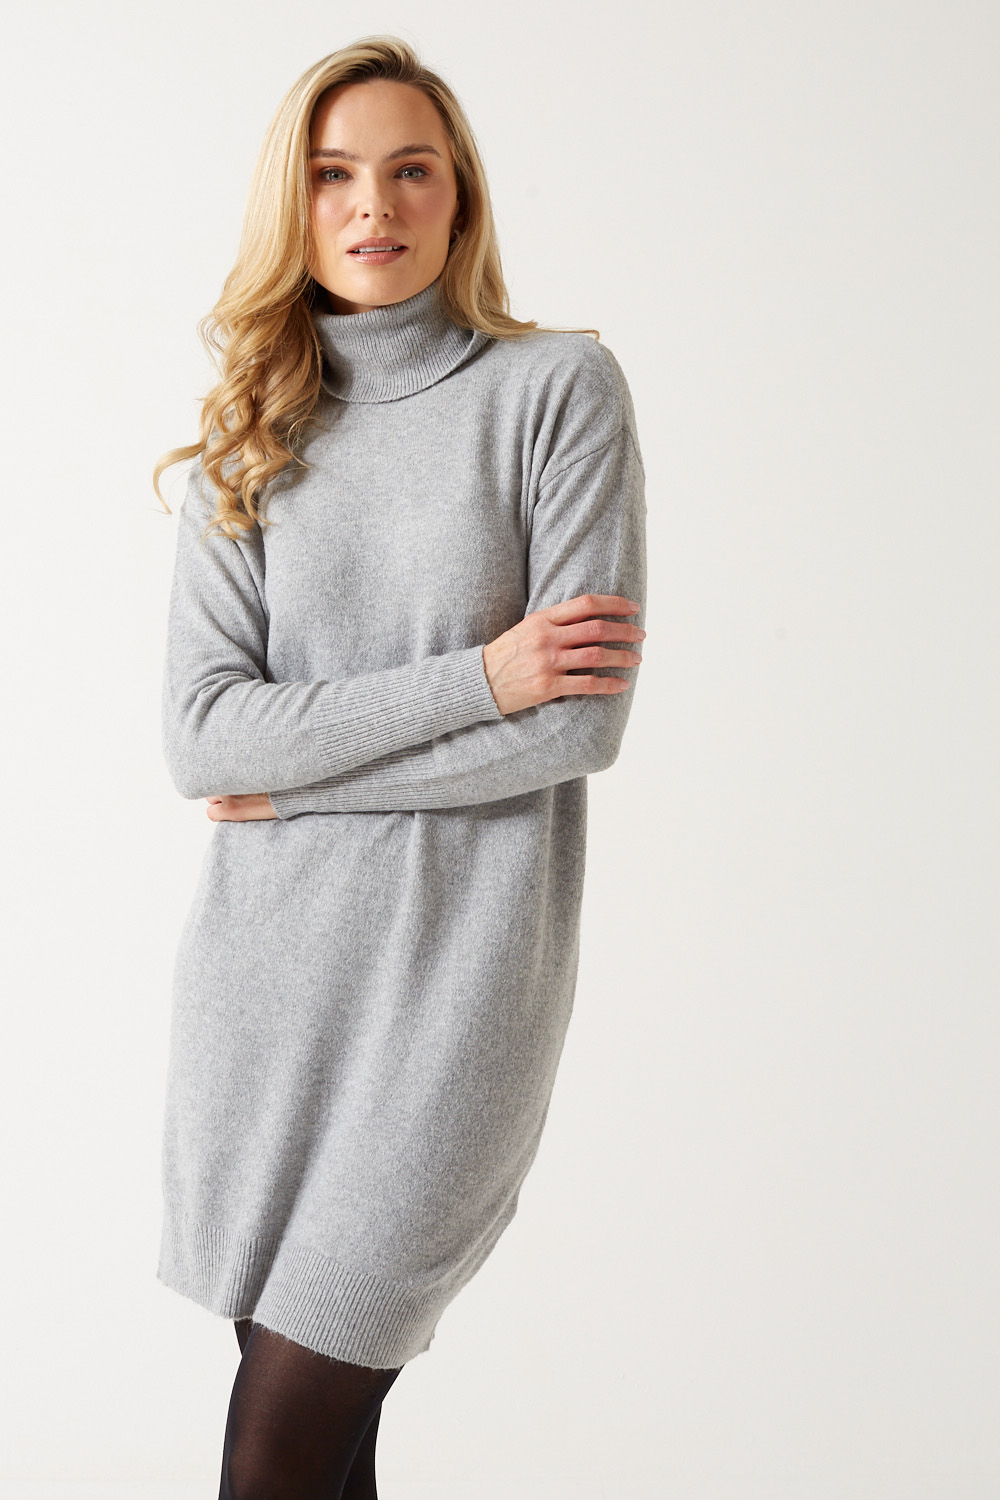 Vero Moda Brilliant Rollneck Jumper - Dress iCLOTHING Light | Grey in iCLOTHING